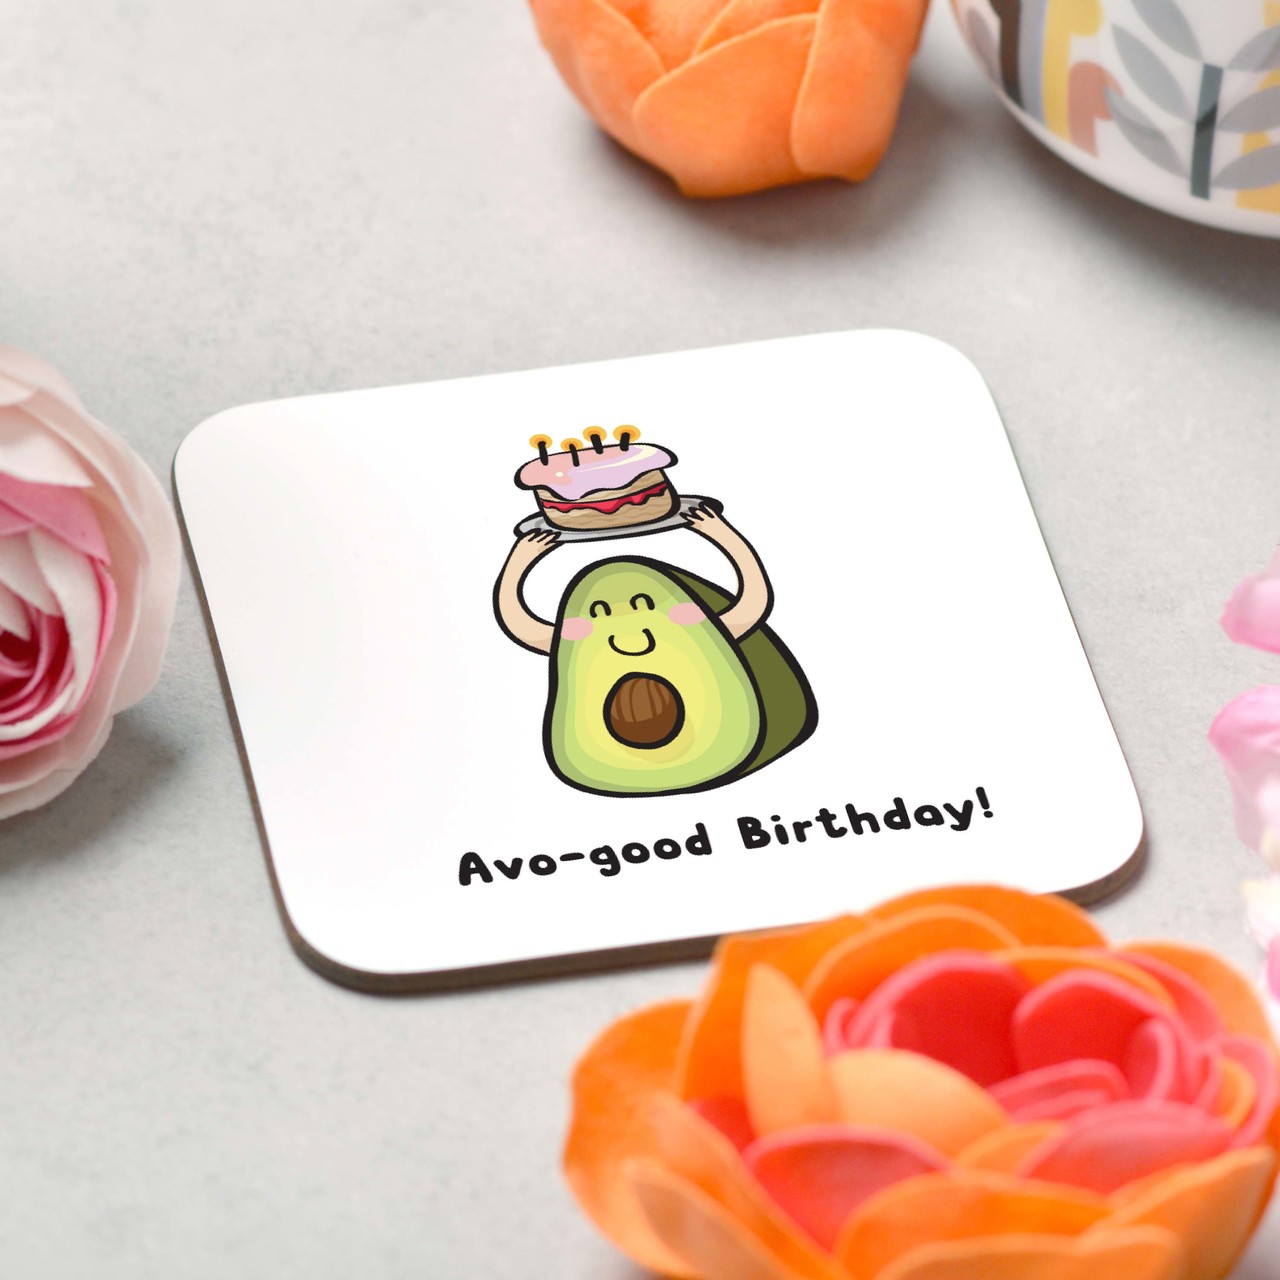 Avo-good Birthday Coaster